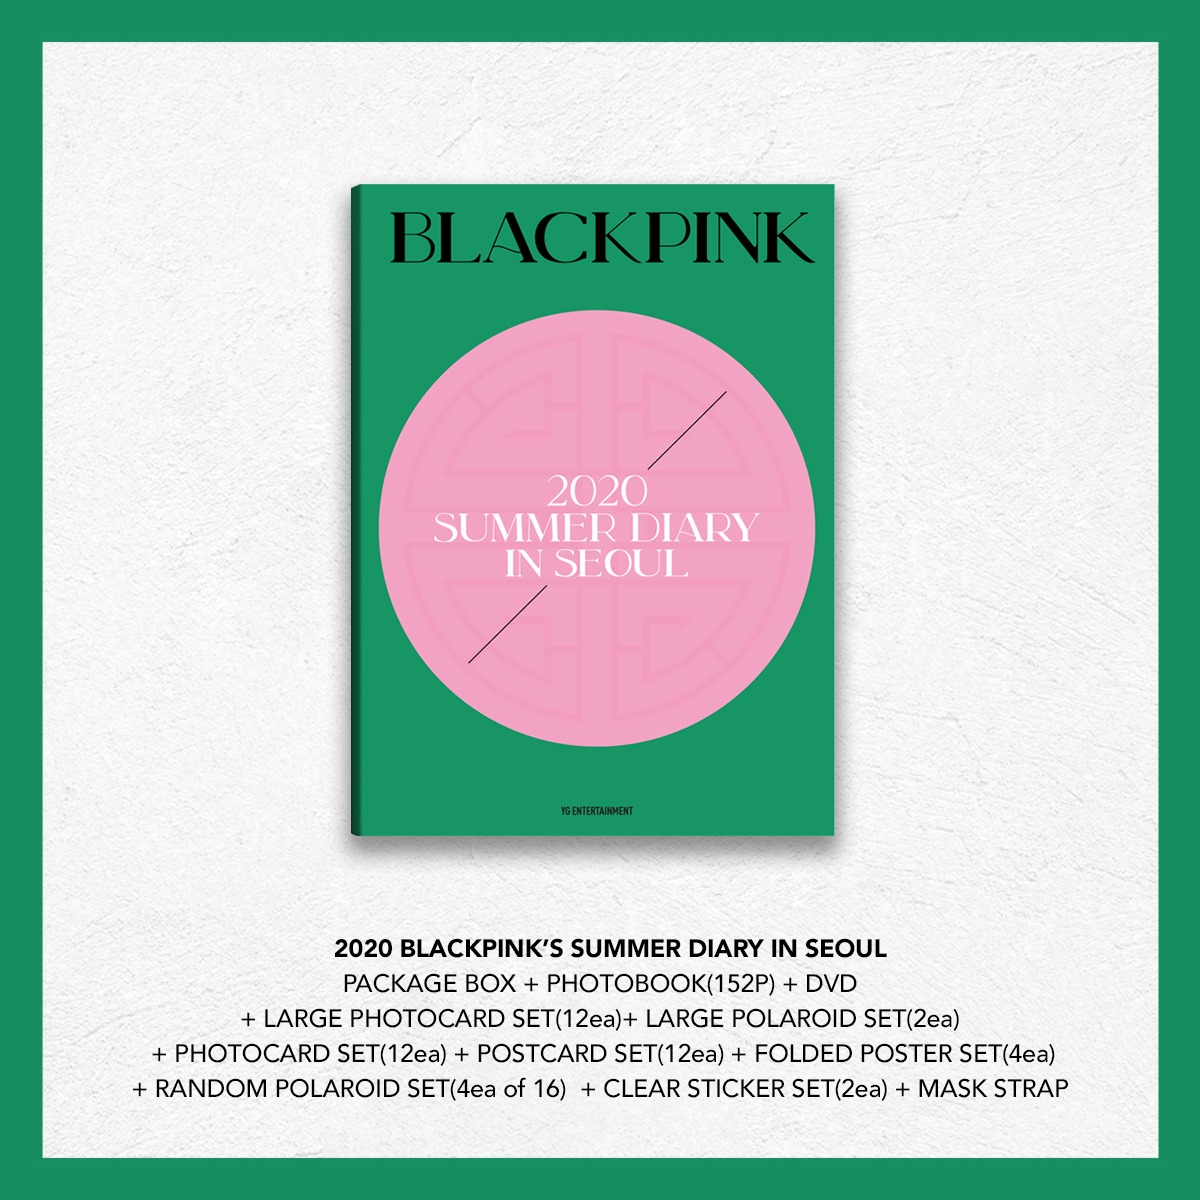 13-Official-Merch-BLACKPINK-Summer-Diary-2020-Seoul